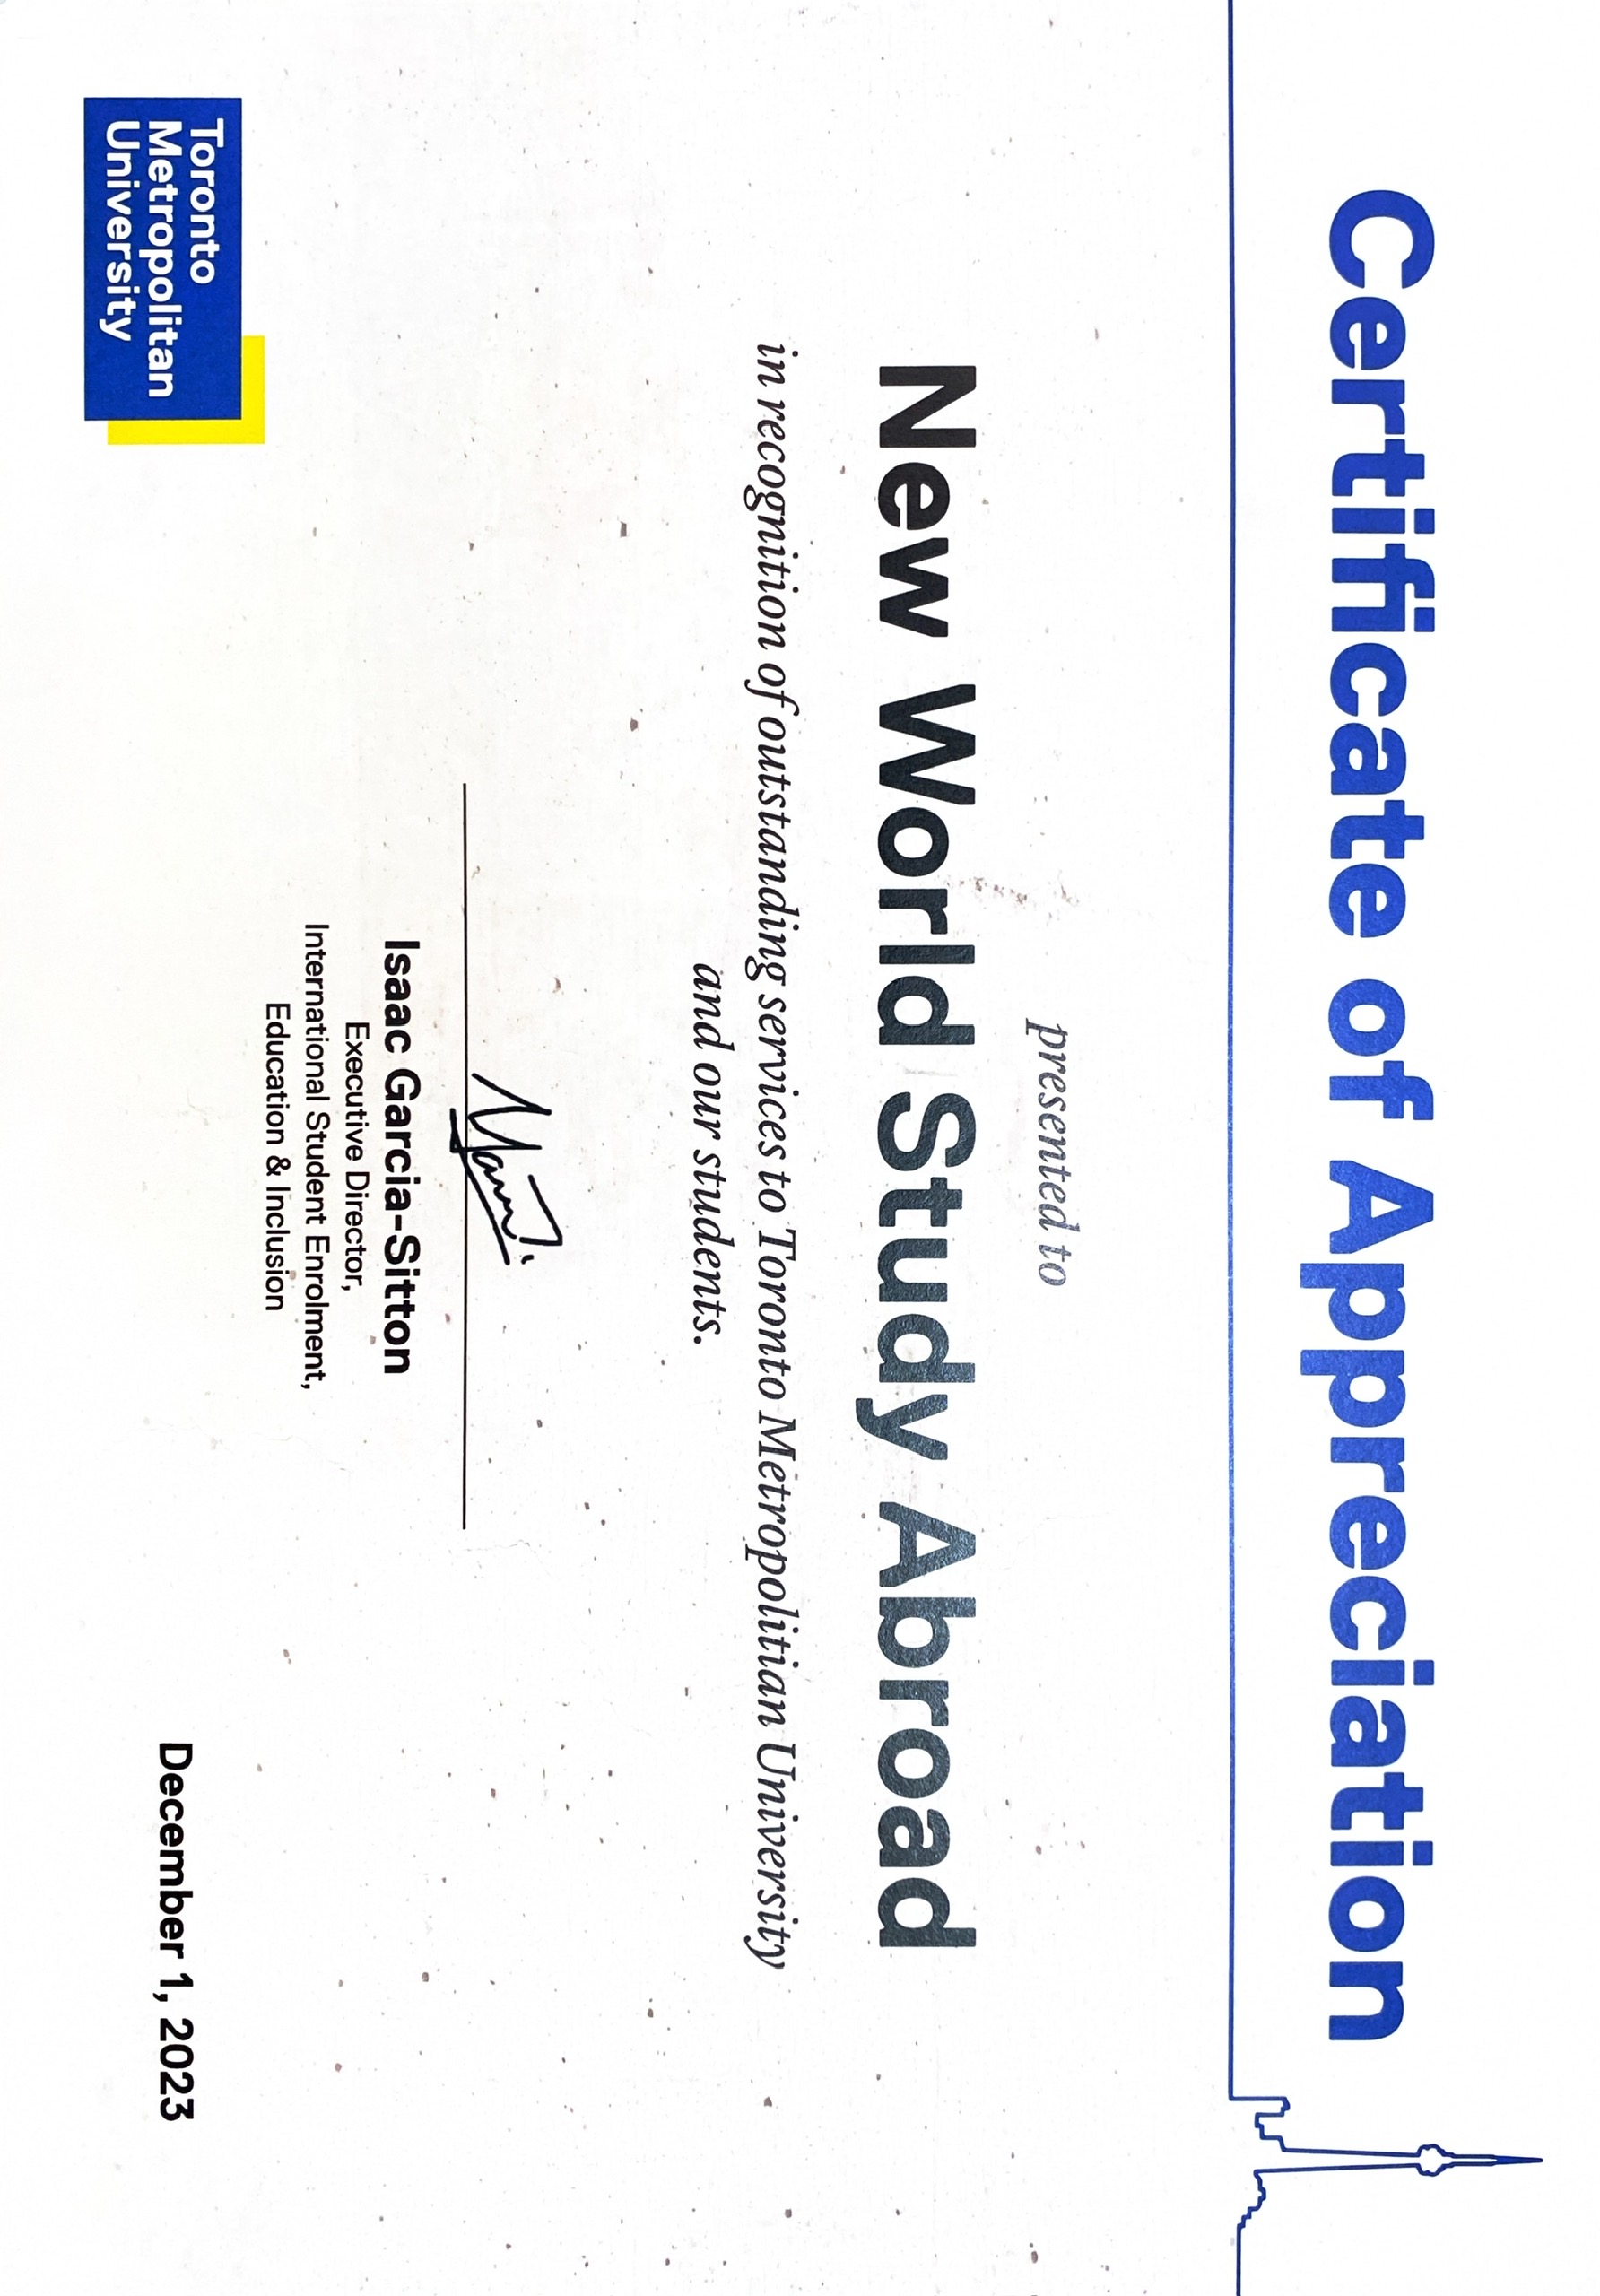 Certificate of Appreciation từ Toronto Metropolitan University TMU (trước đây là Ryerson University), Canada